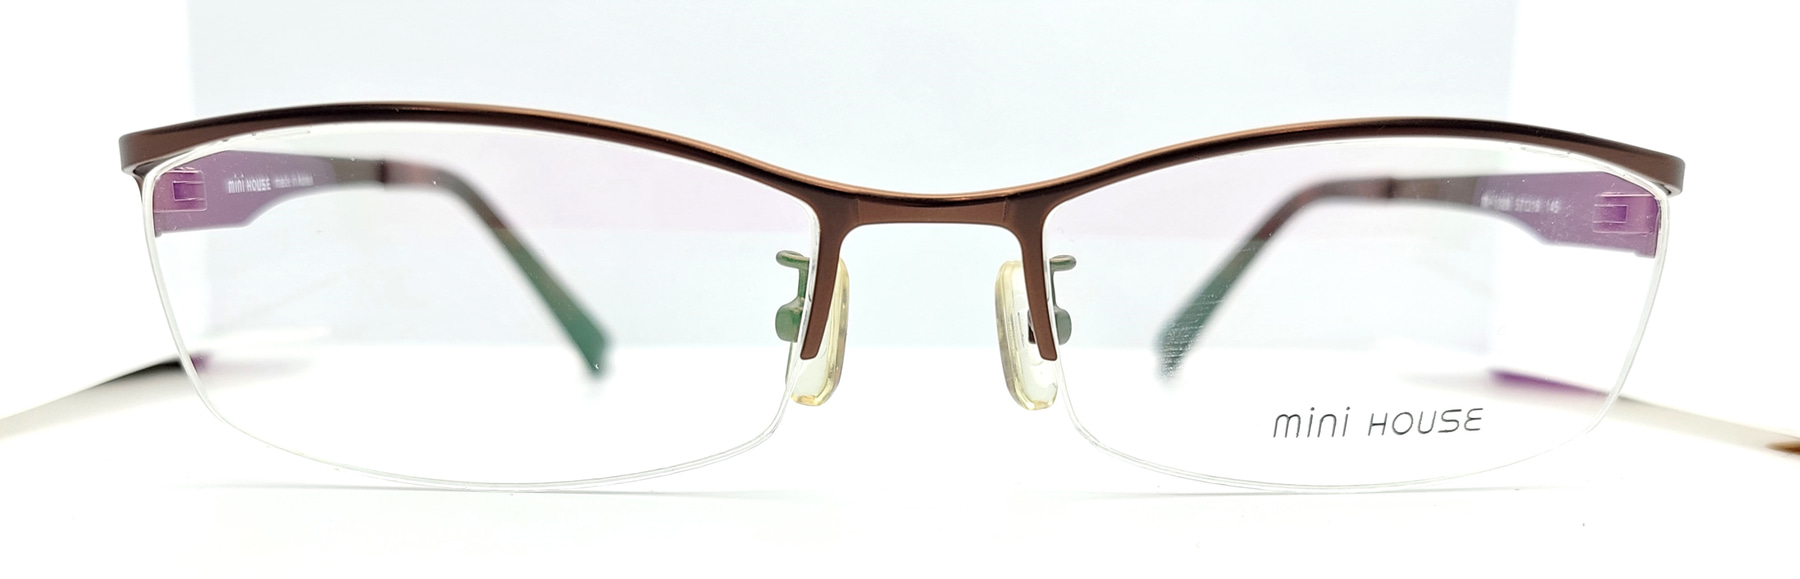 MINIHOUSE M-1026, Korean glasses, sunglasses, eyeglasses, glasses